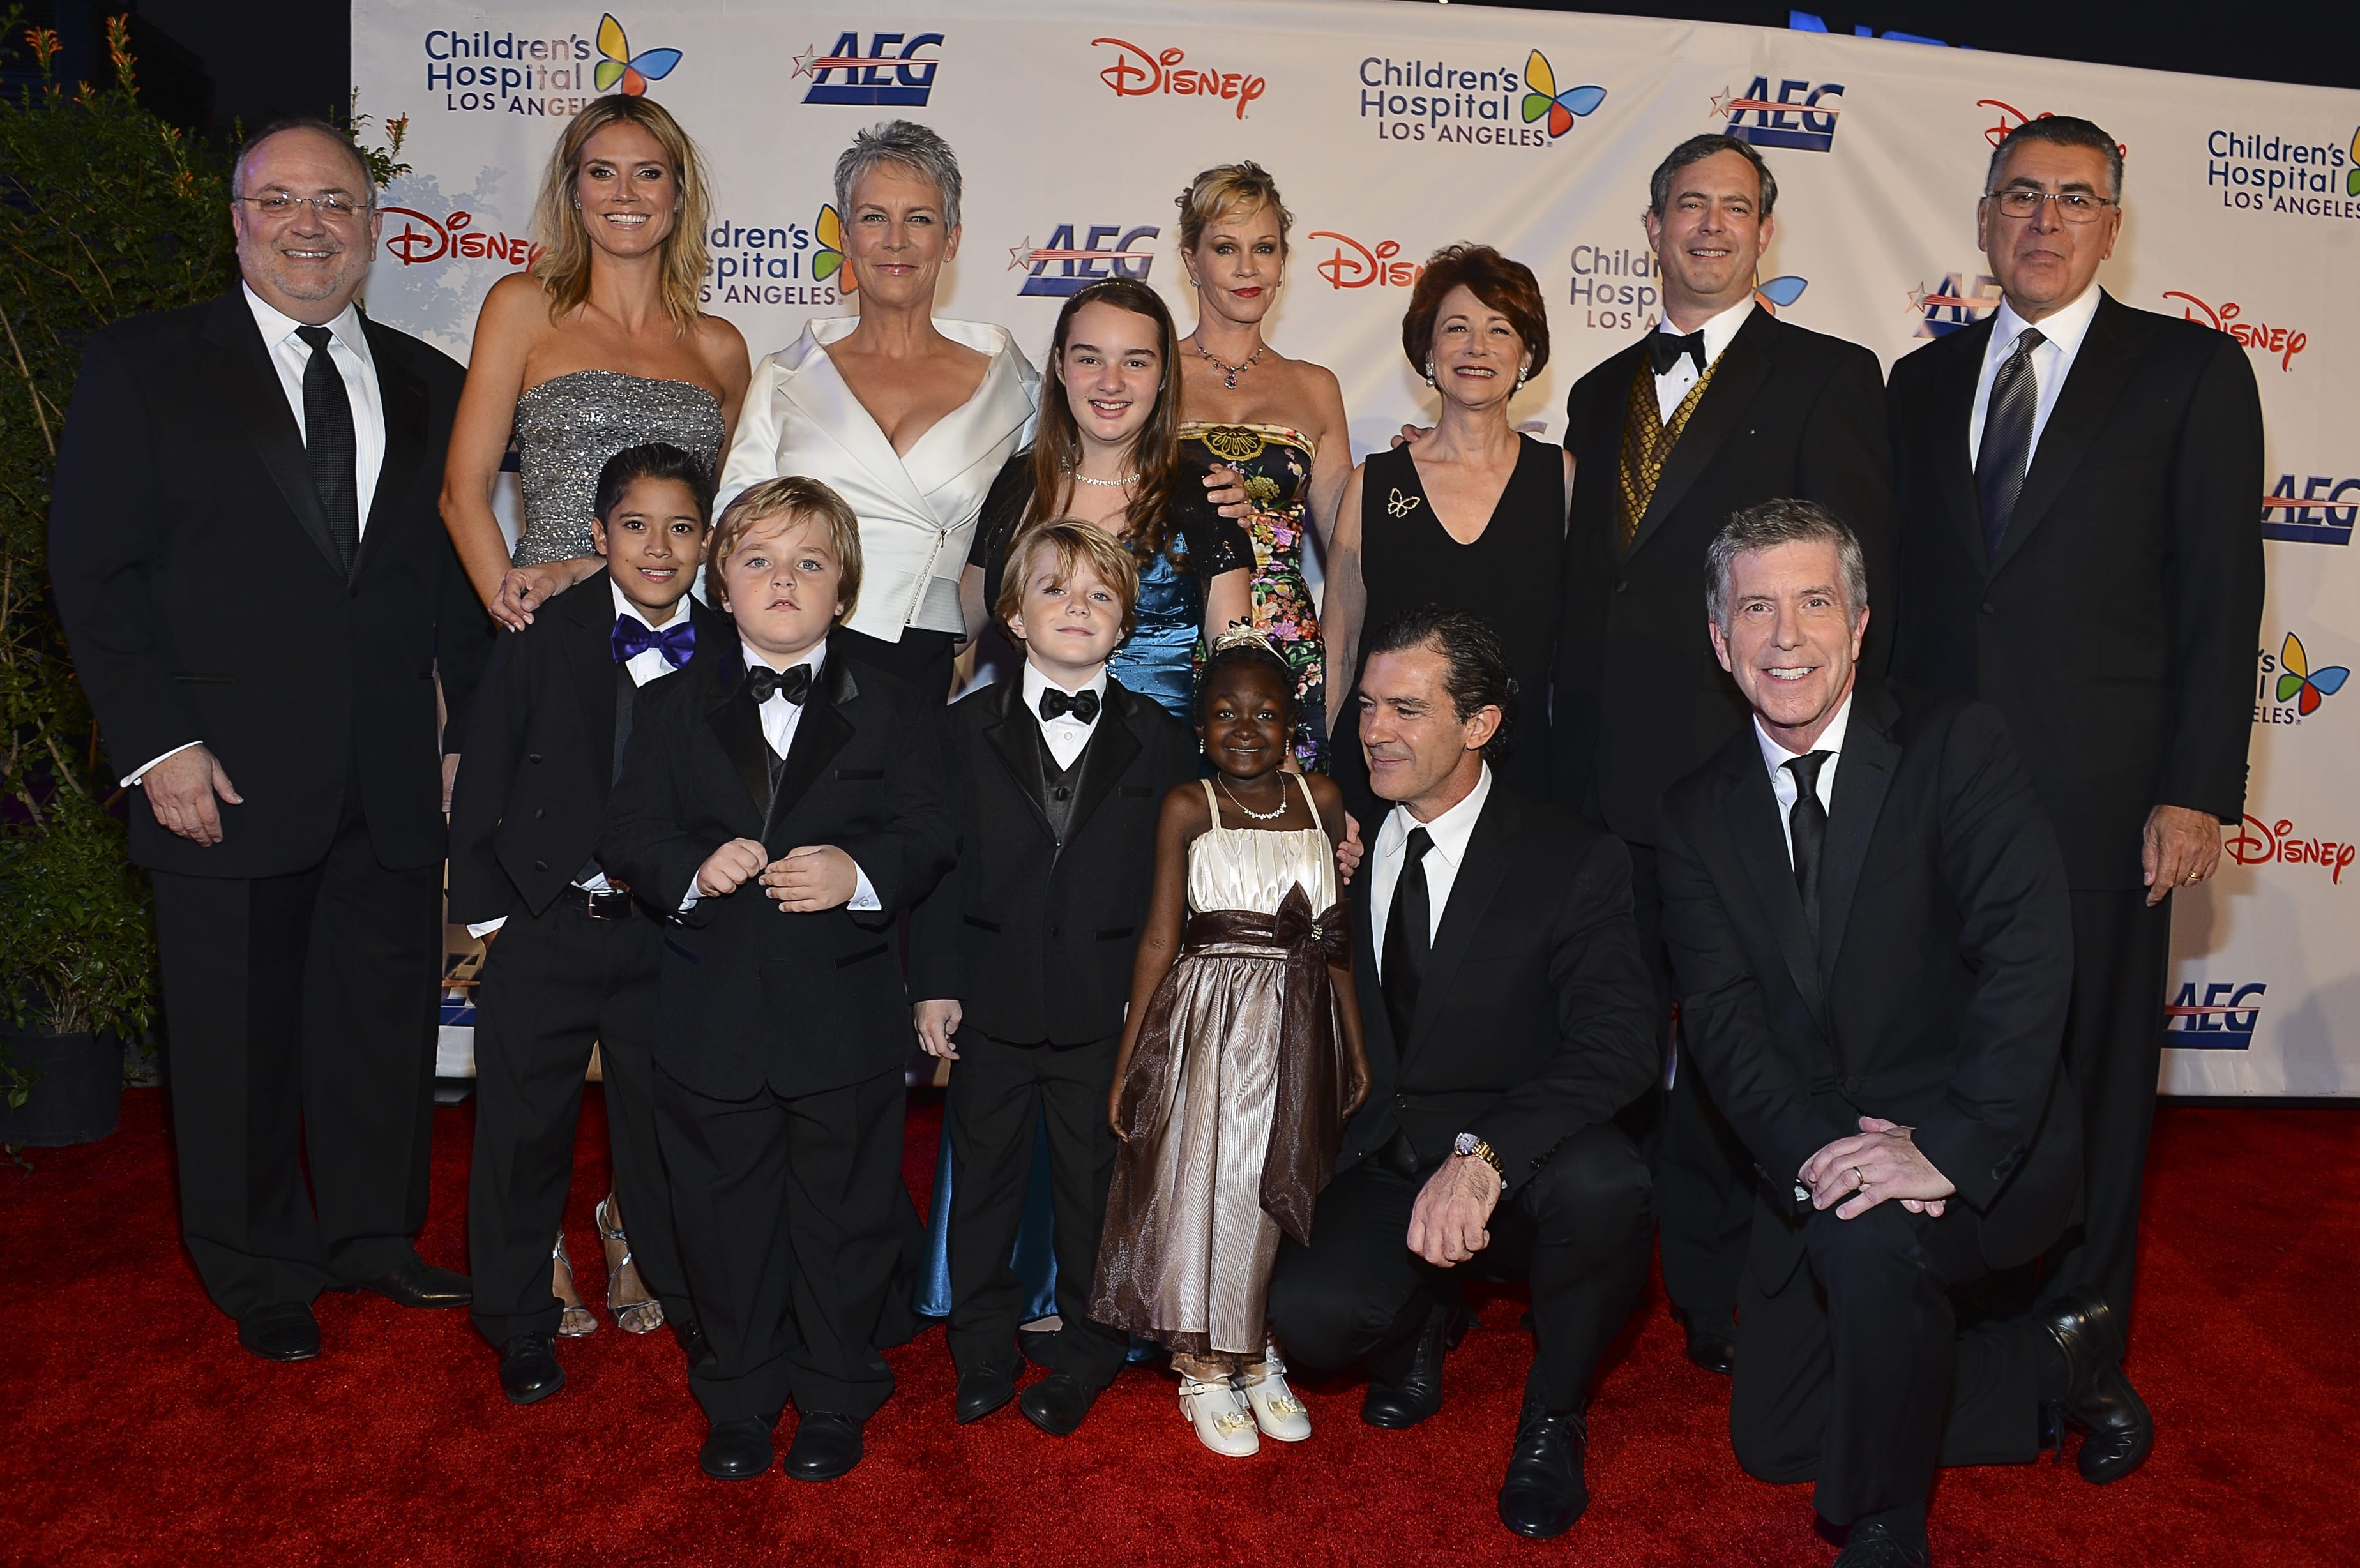 Children’s Hospital Los Angeles Gala: Noche de Niños Raises $2.6 Million | CHLA3696 x 2456